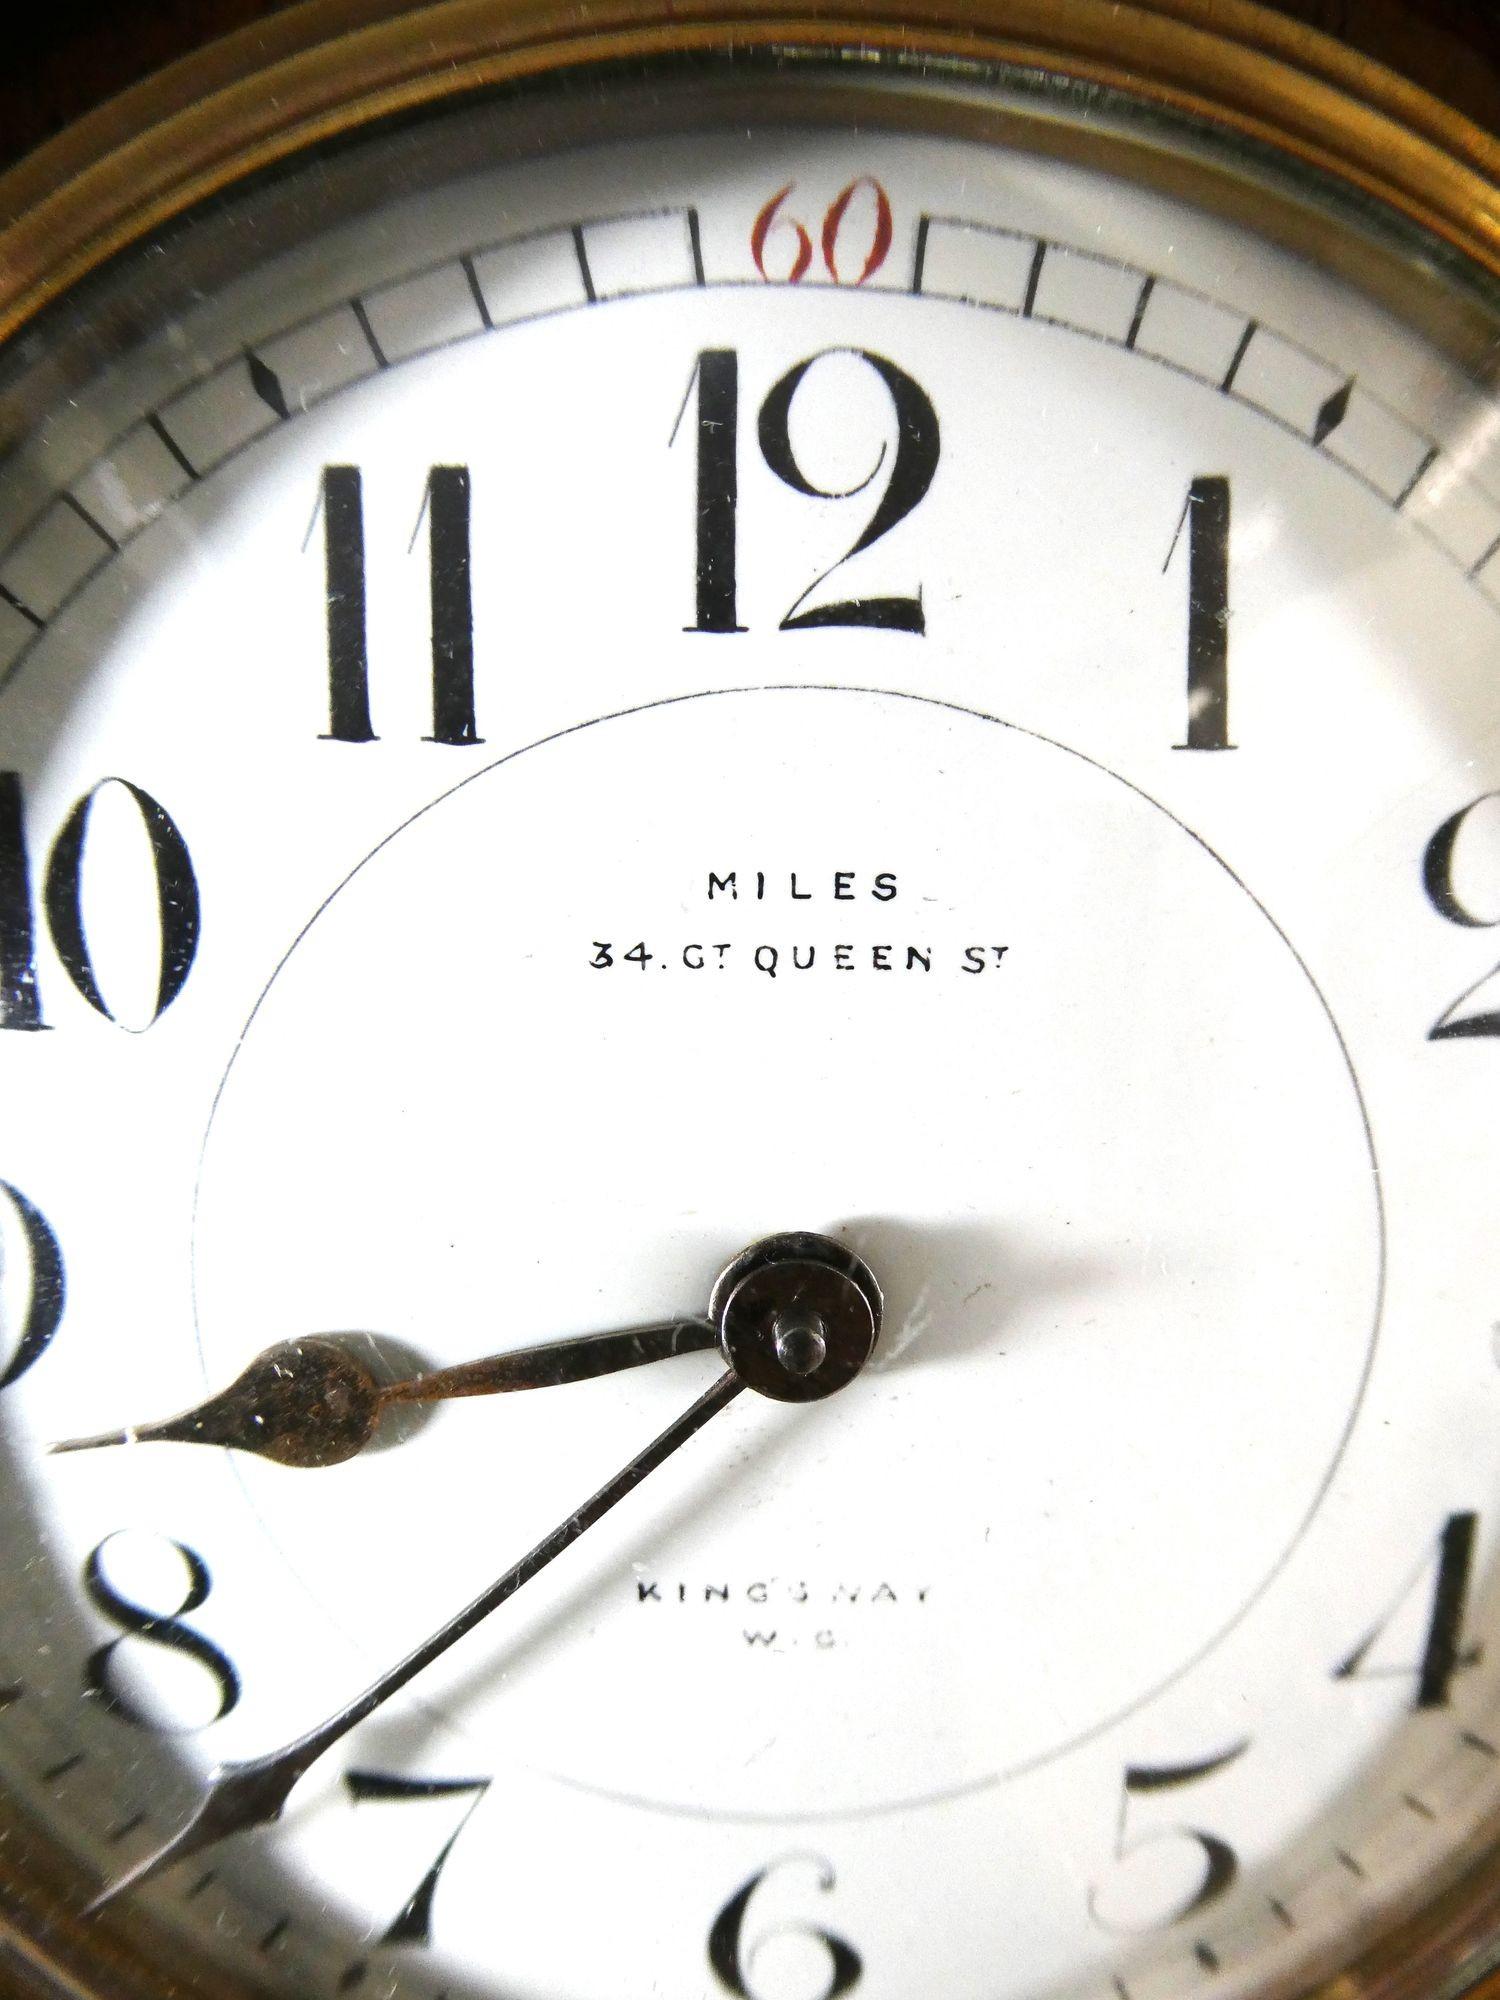 Miniature Mahogany Mantel Clock, Miles, Gt Queen St. Kingsway For Sale 1